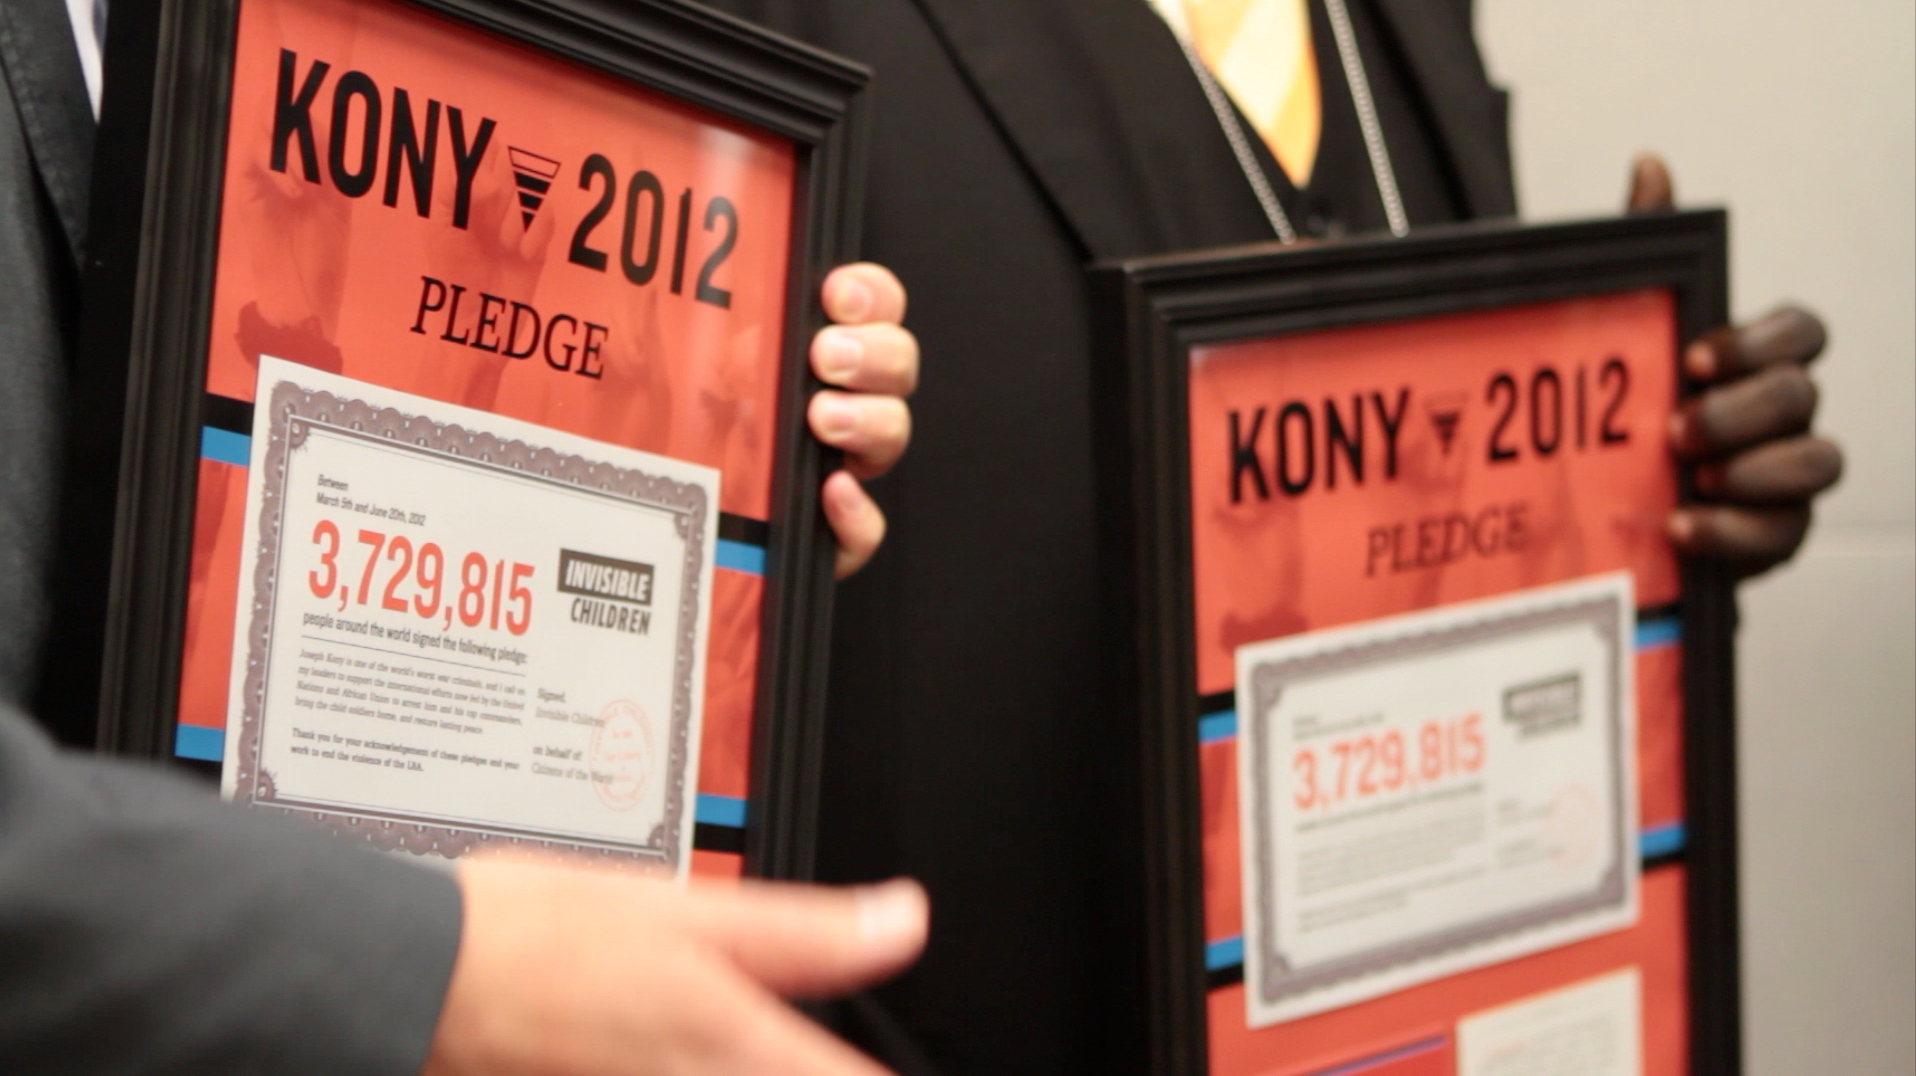 KONY 2012 Pledges, close up